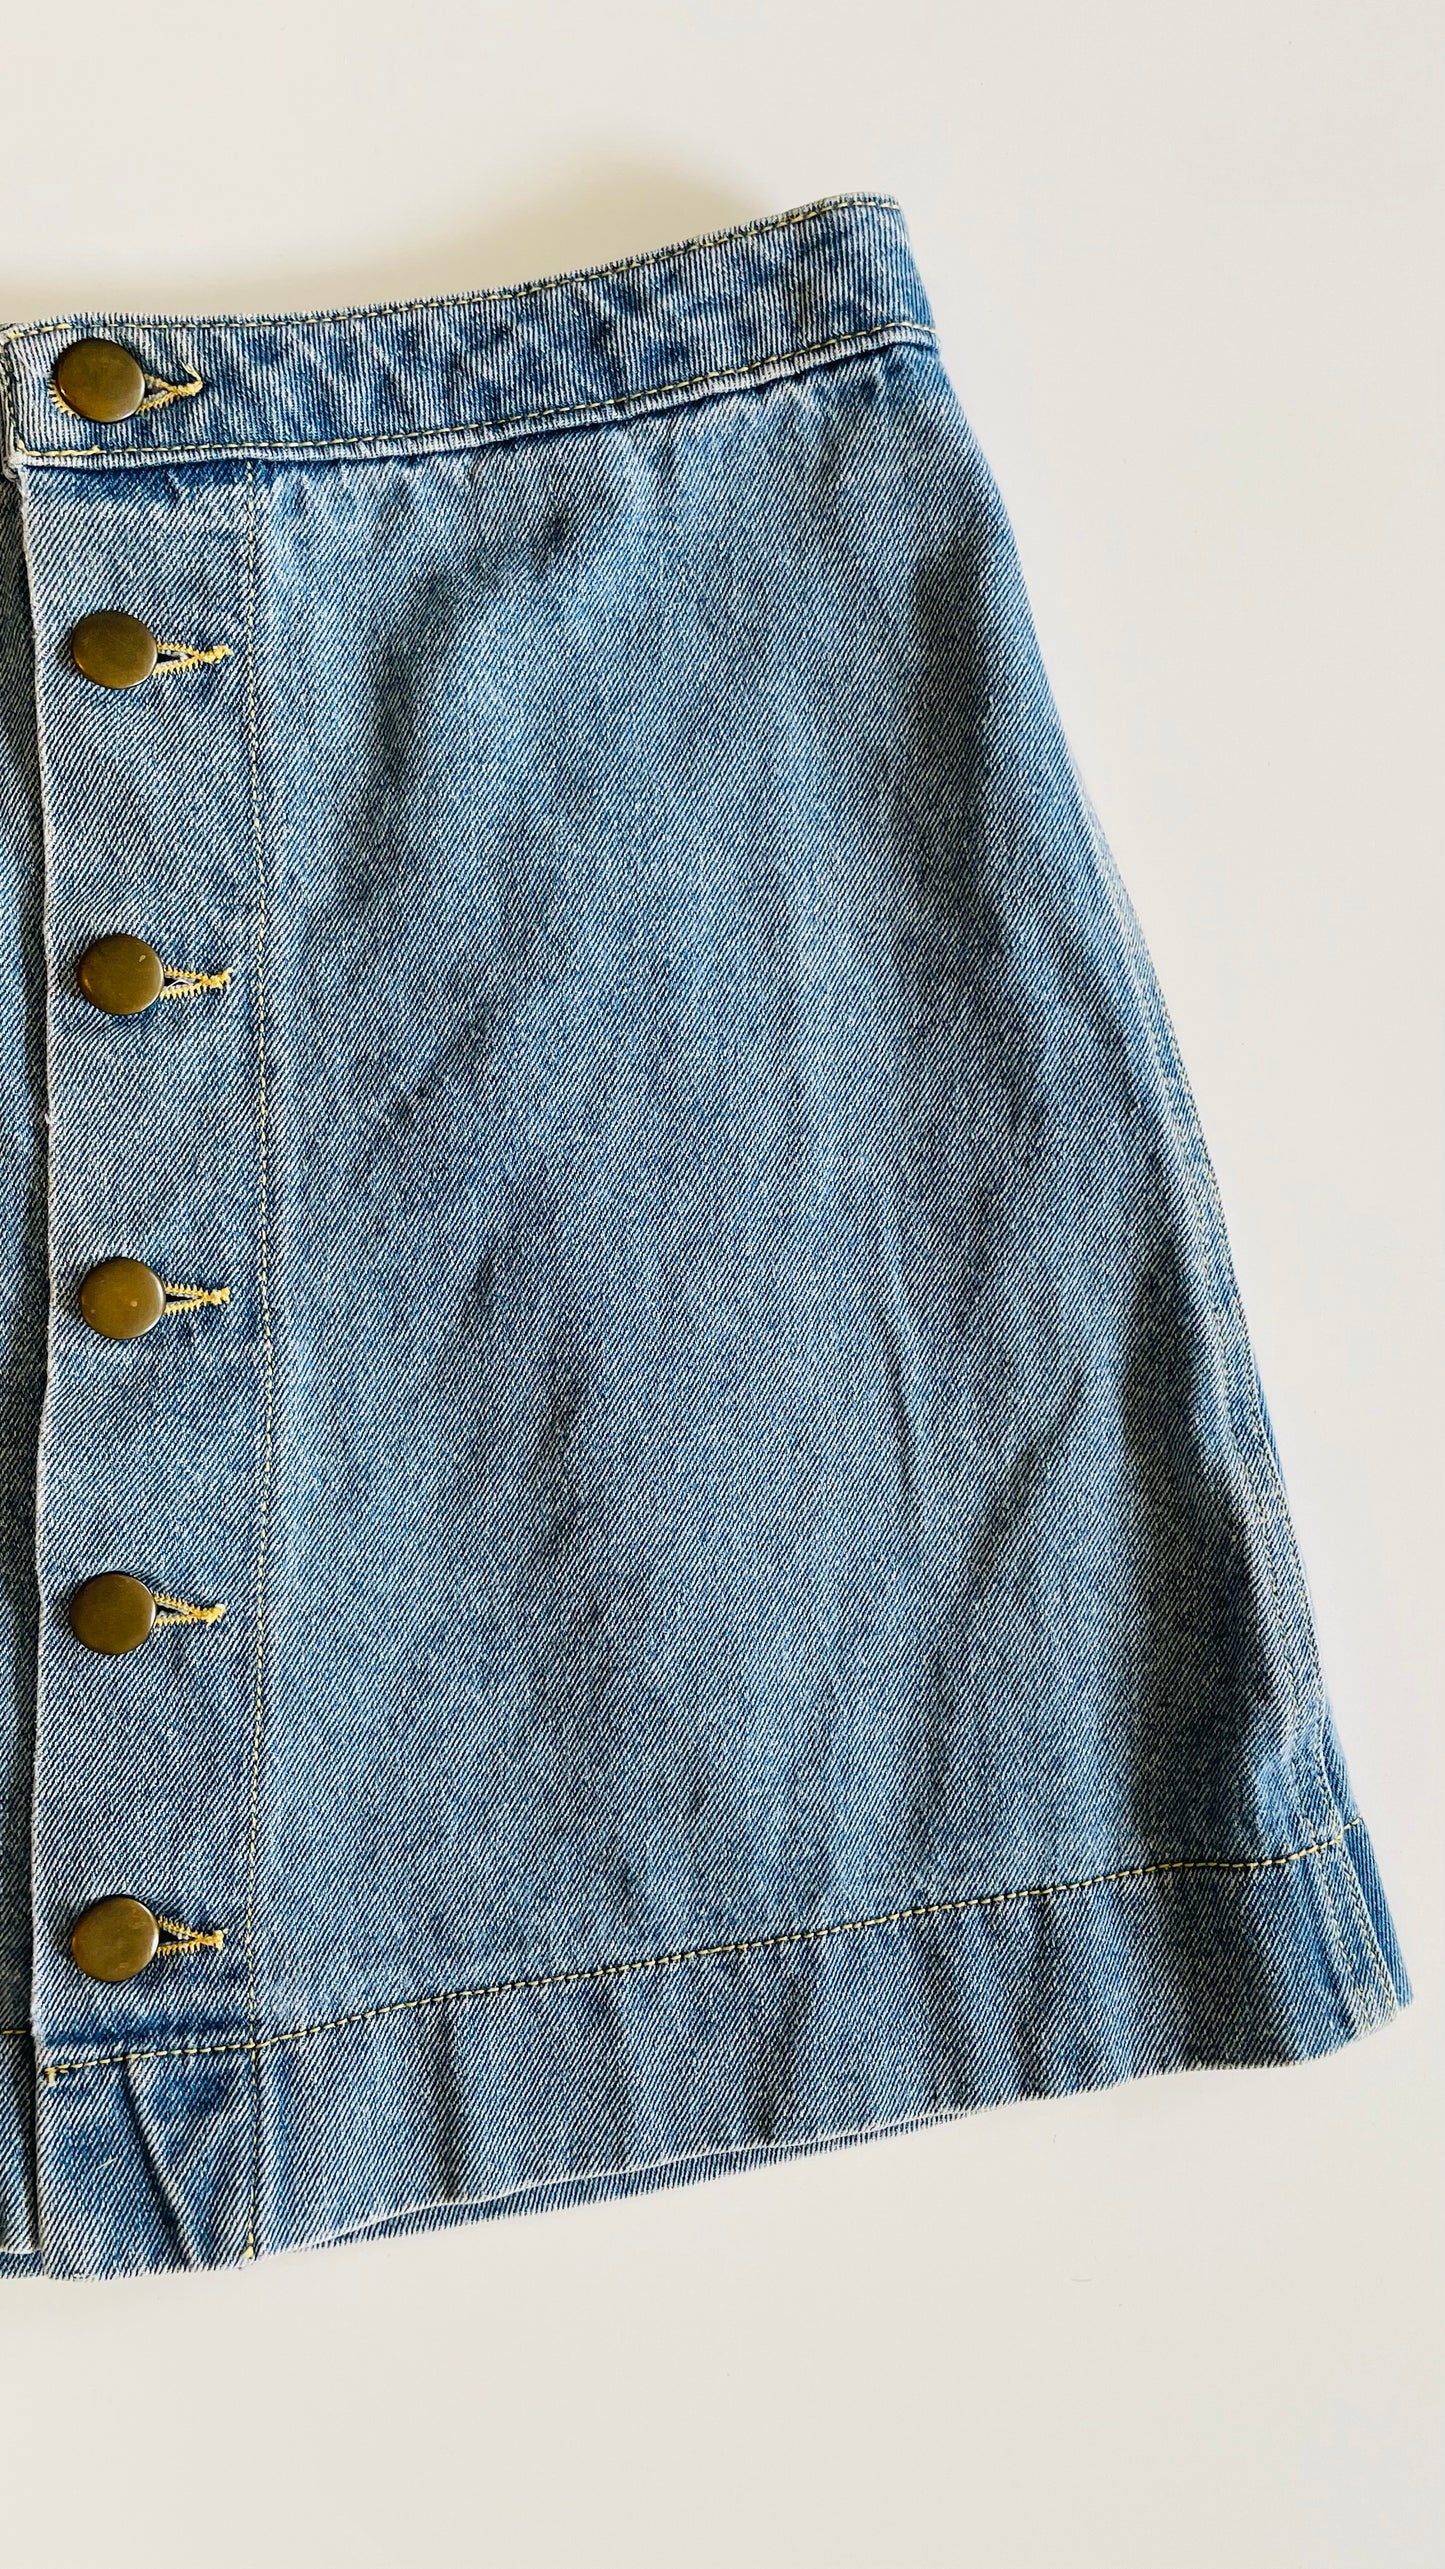 Pre-Loved blue denim American Apparel a-line mini skirt - Size S